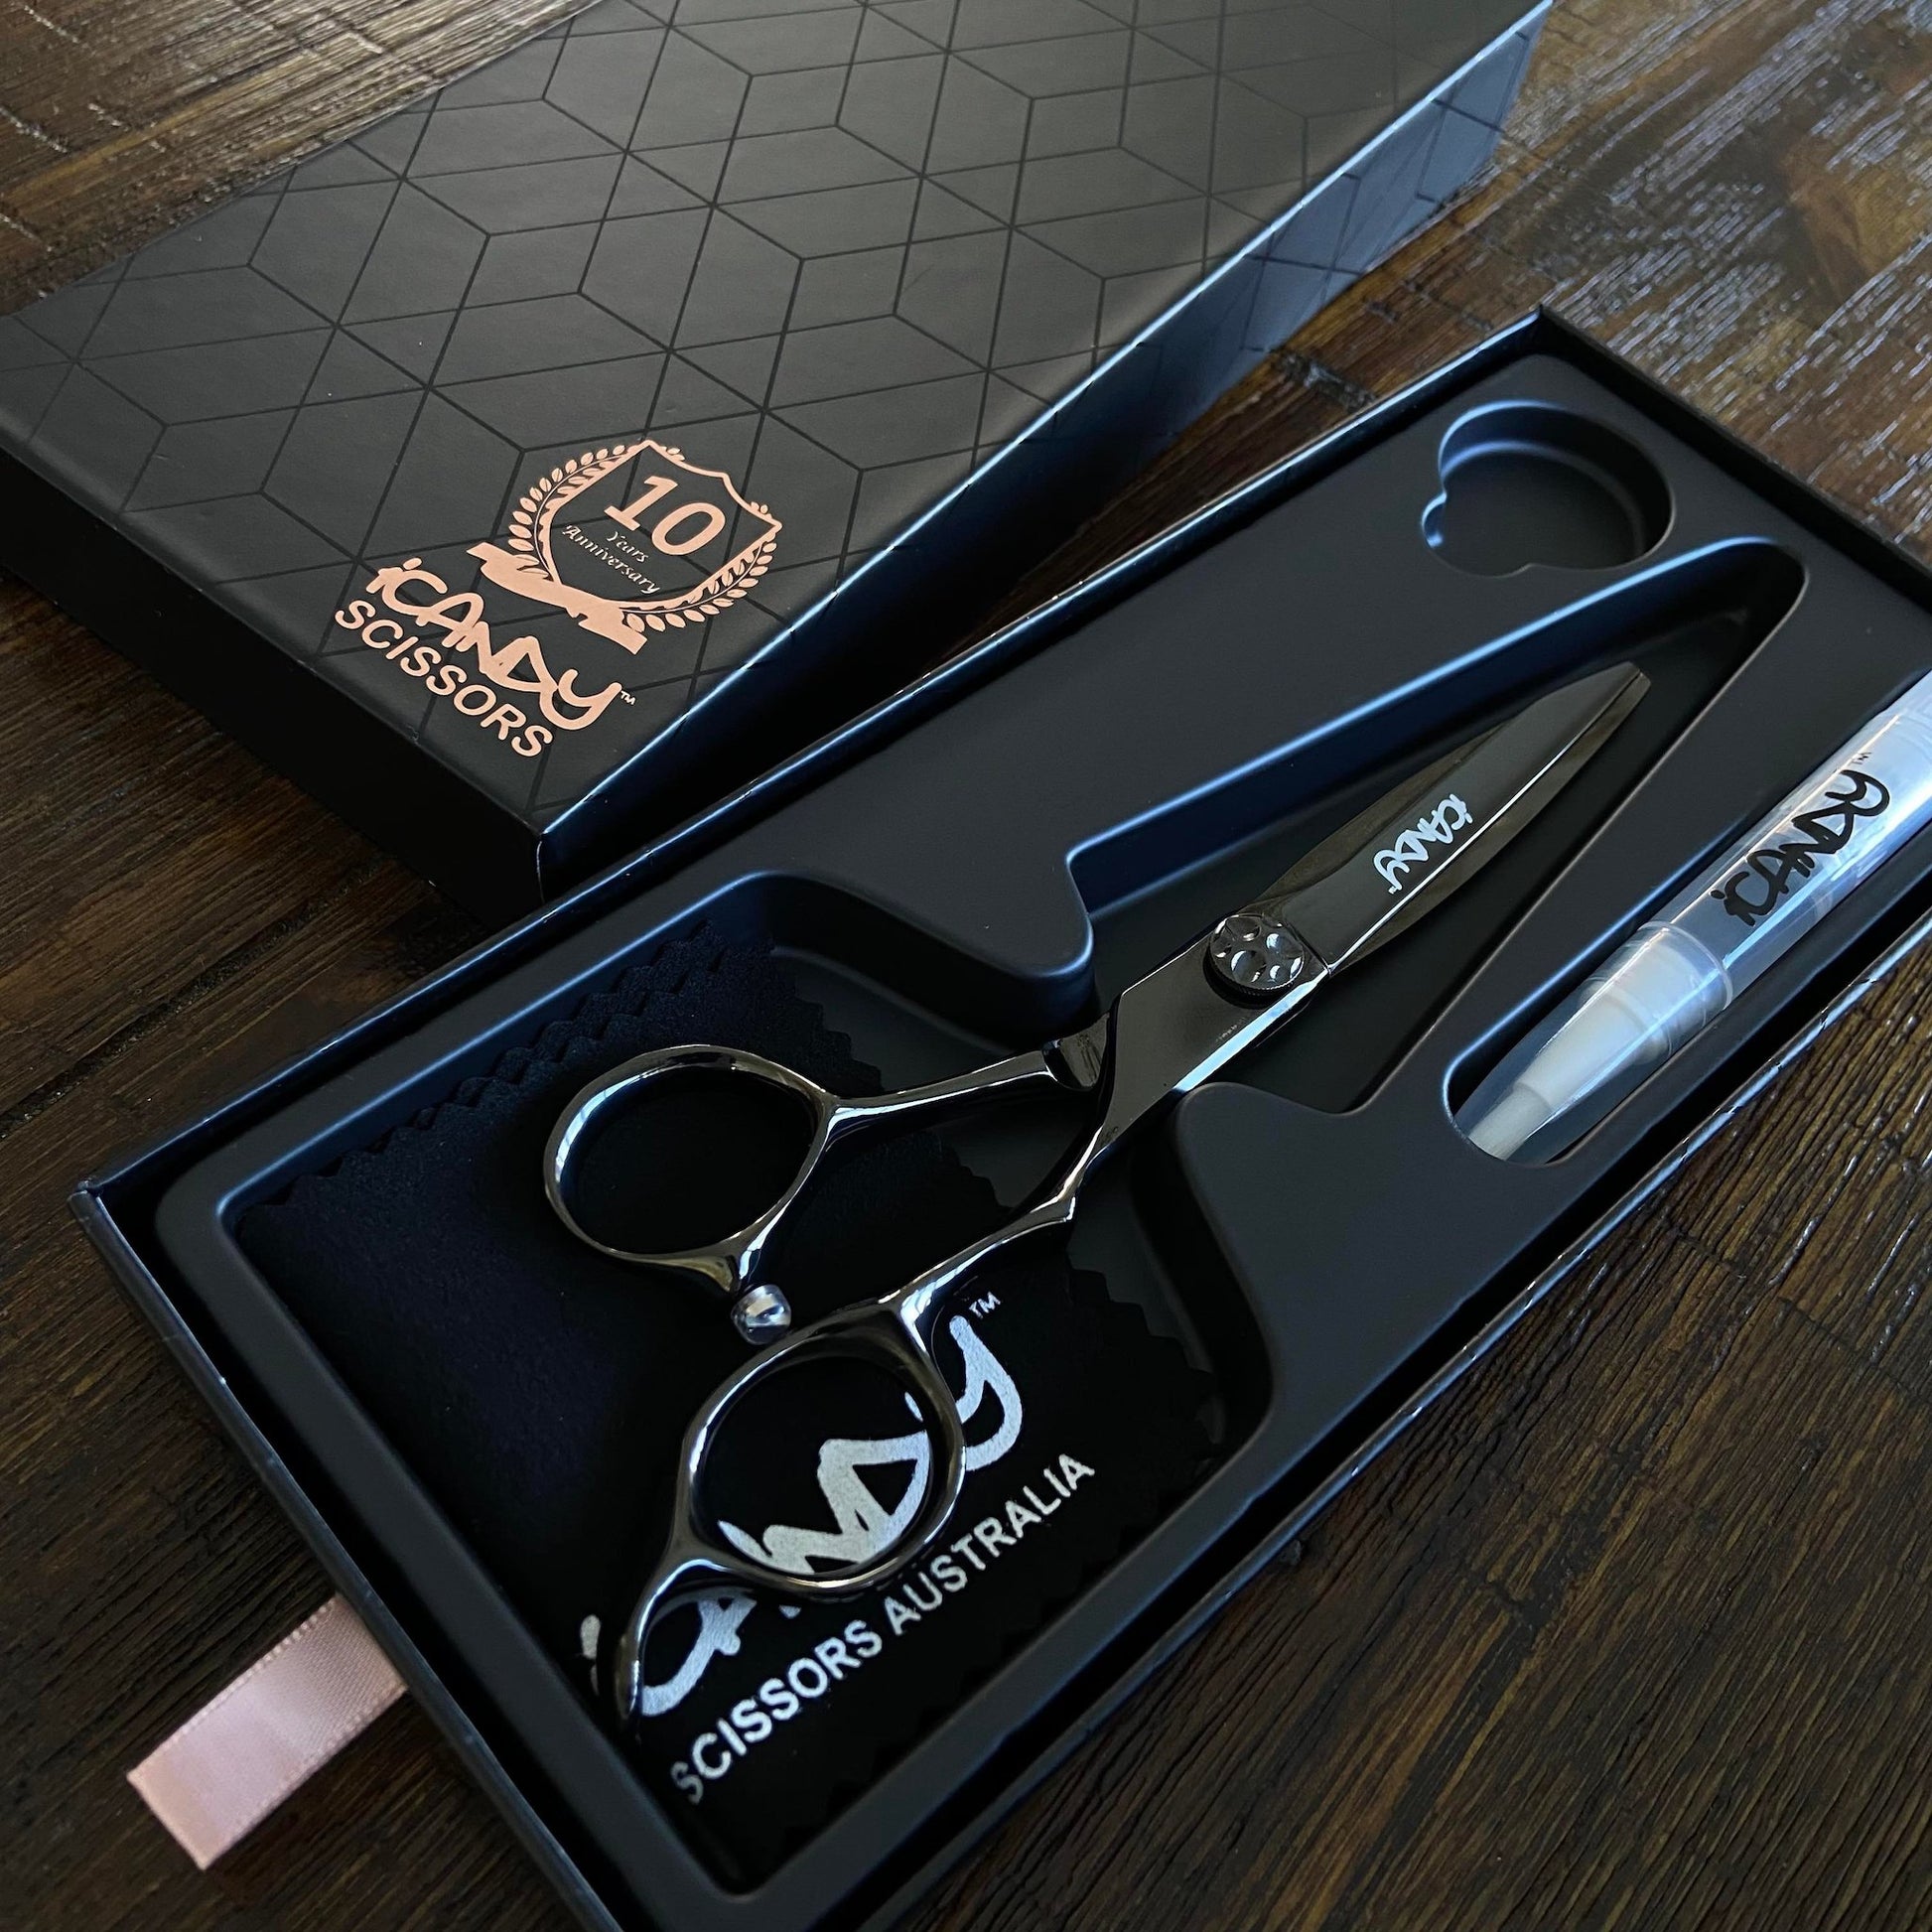 iCandy Sword Midnight Black VG10 6.1" 10 Years Anniversary Edition Scissors Open Box